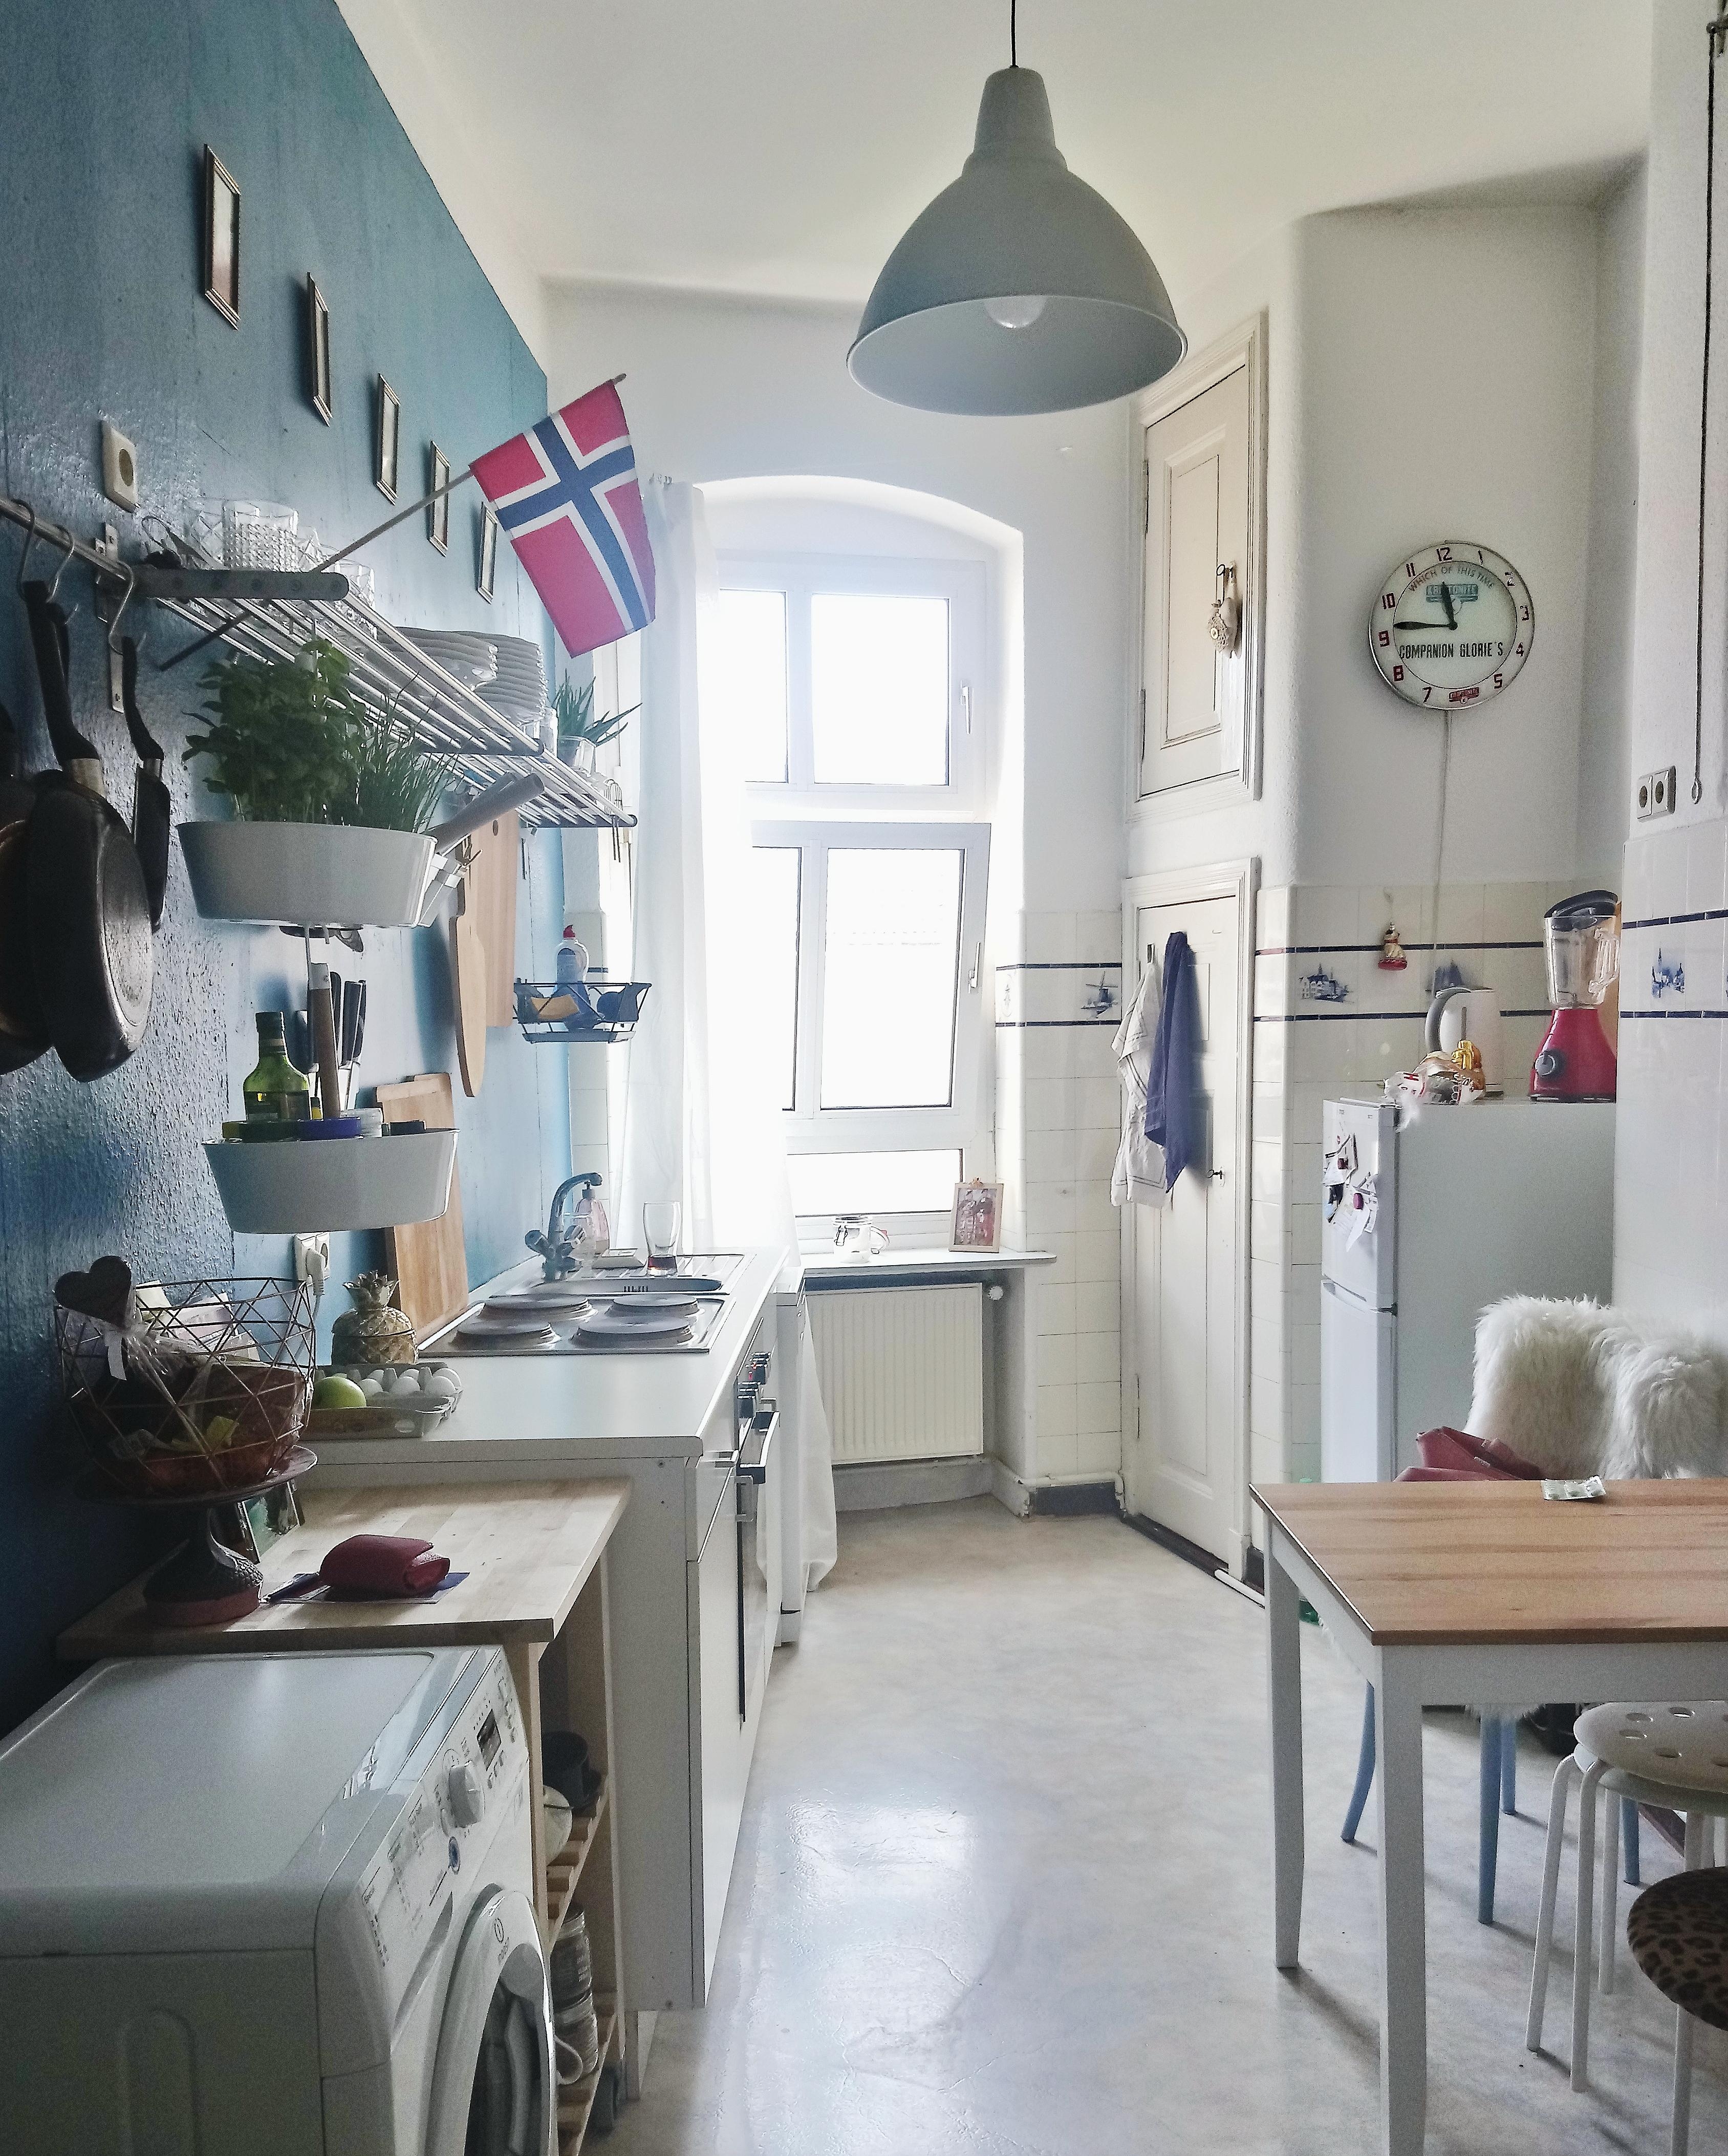 Norwegisch-Deutsche Küchenpower.
#interior #scandinavianhome meets #grannystyled #kuechenliebe 